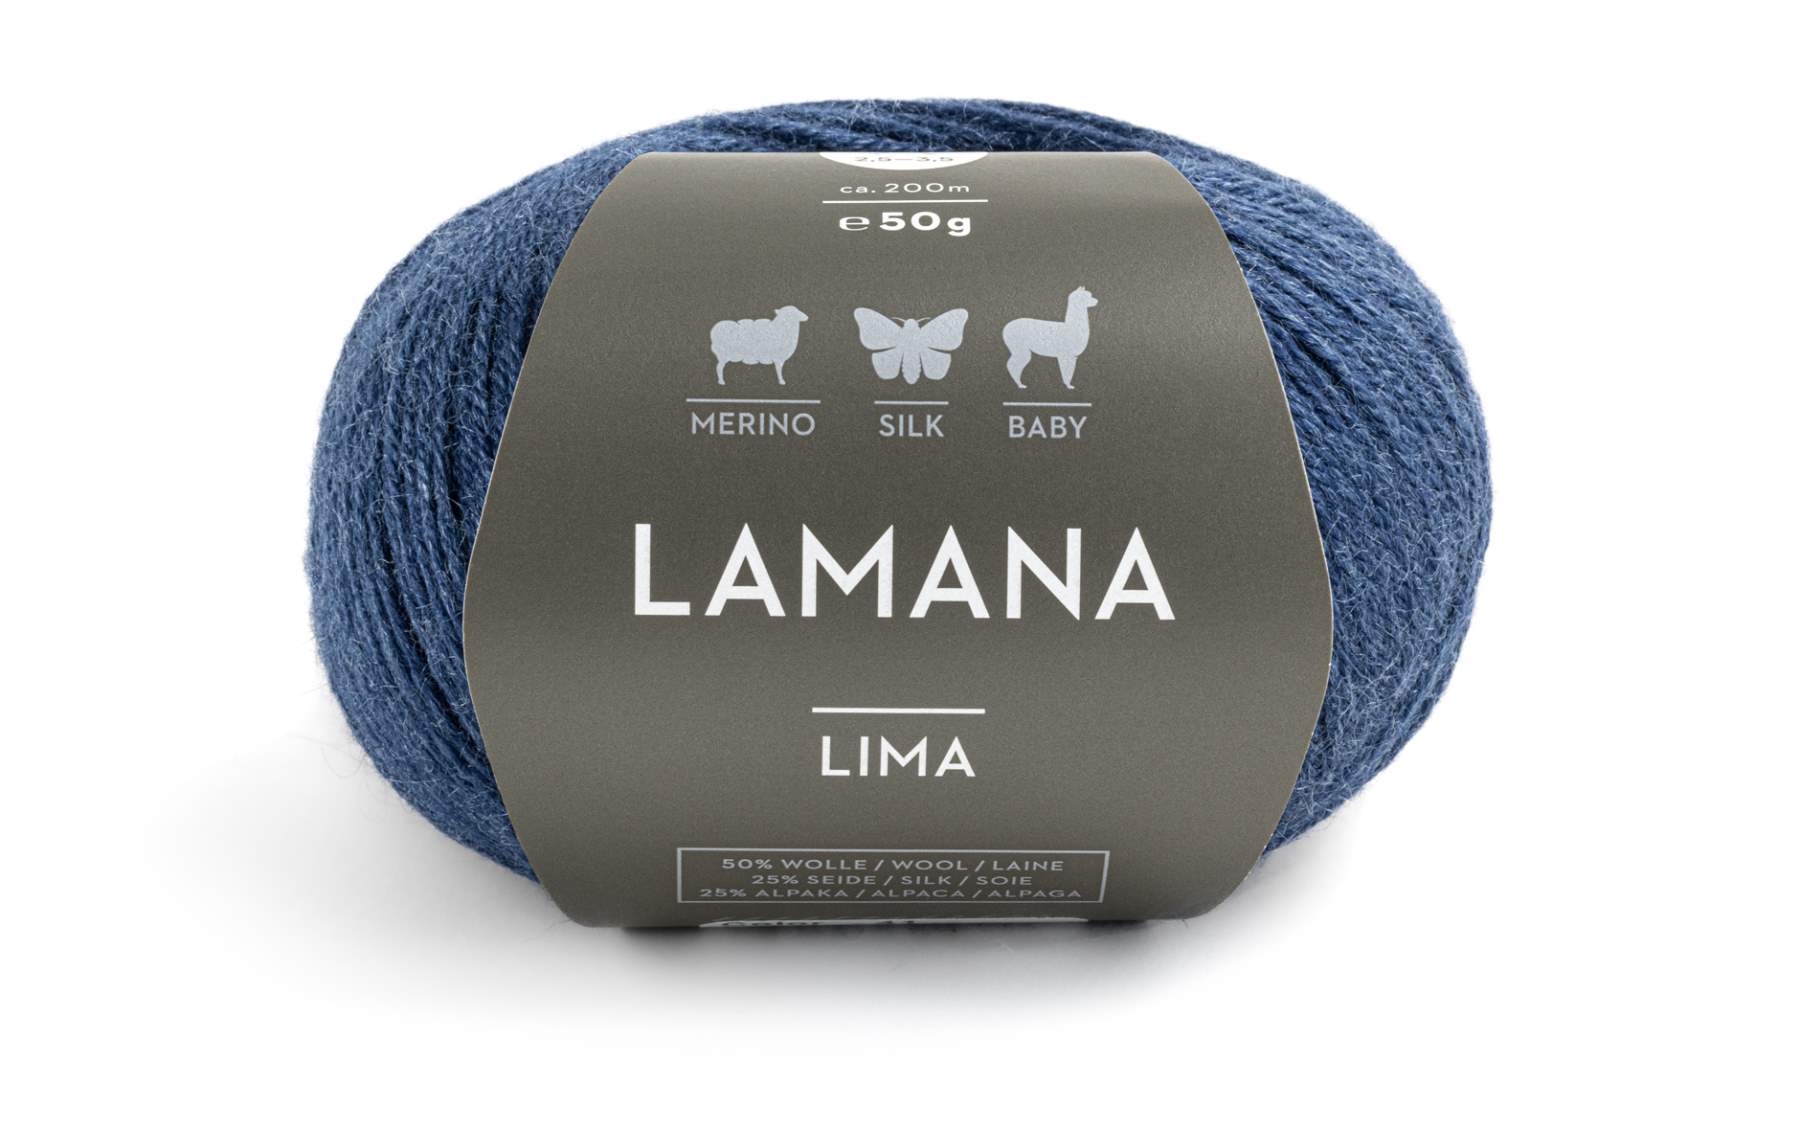 LIMA - Lamana